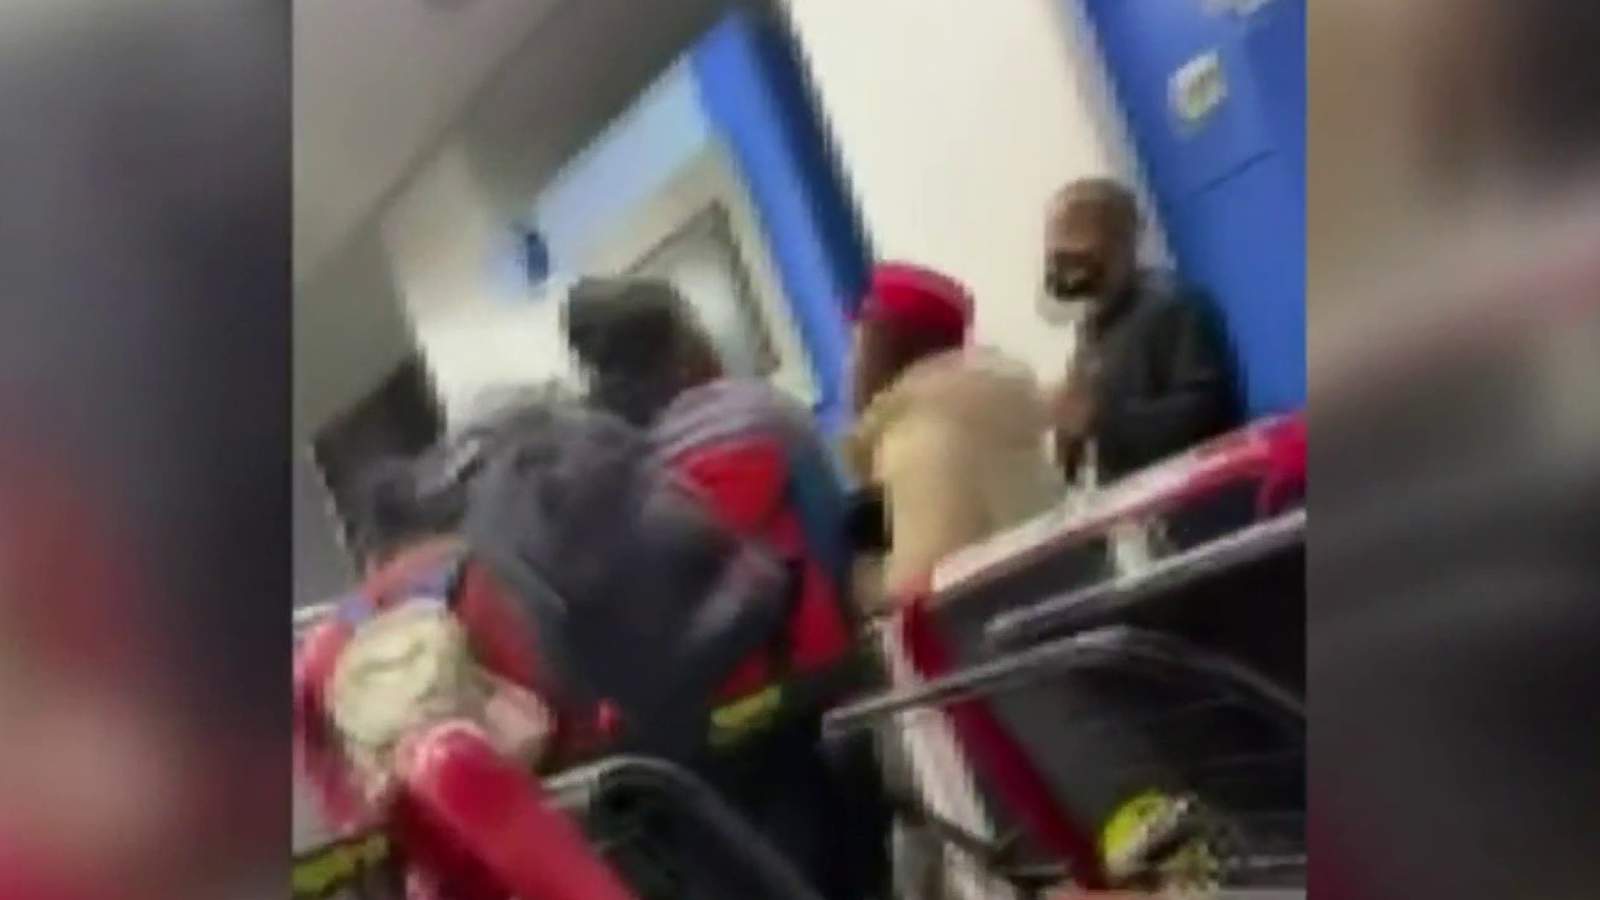 2 people accused of Spirit Airlines baggage dispute at Detroit Metro Airport